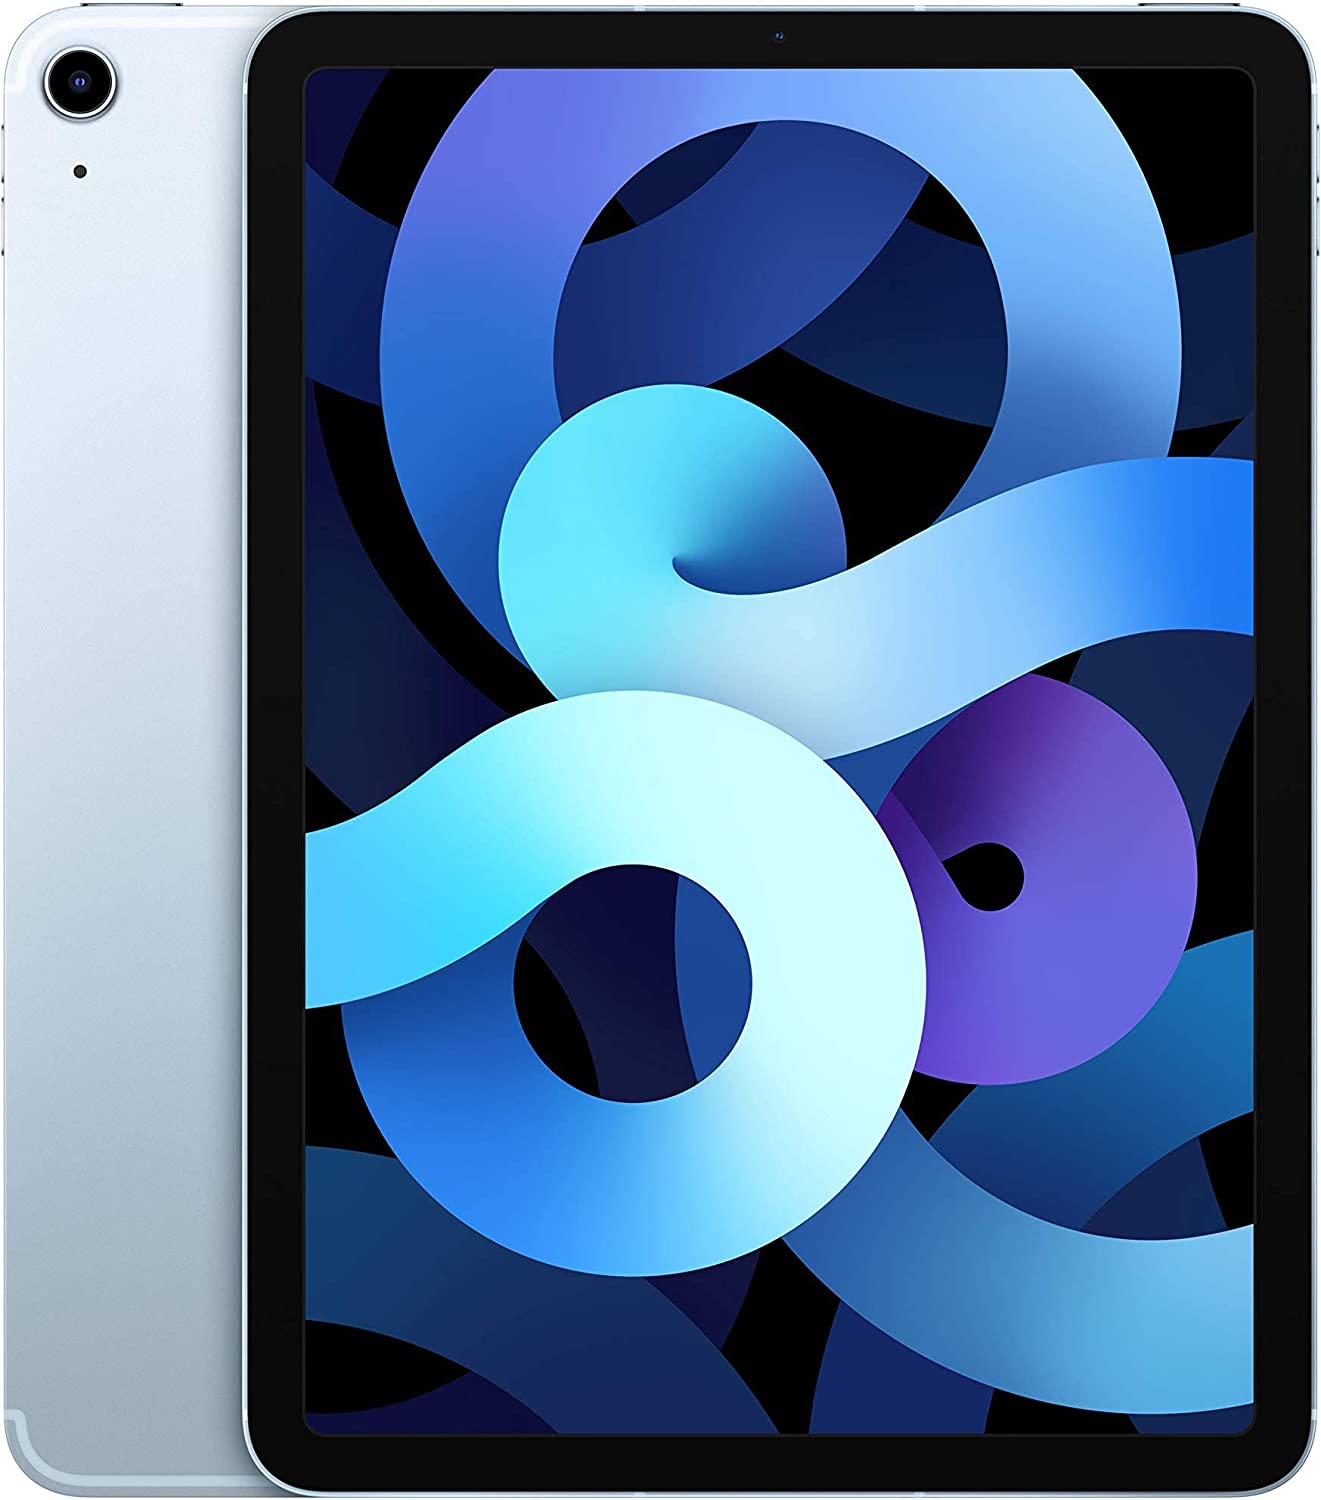 Apple iPad Air 4th Gen 64GB Wifi + Cellular (Unlocked) - Sky Blue (Certified Refurbished)